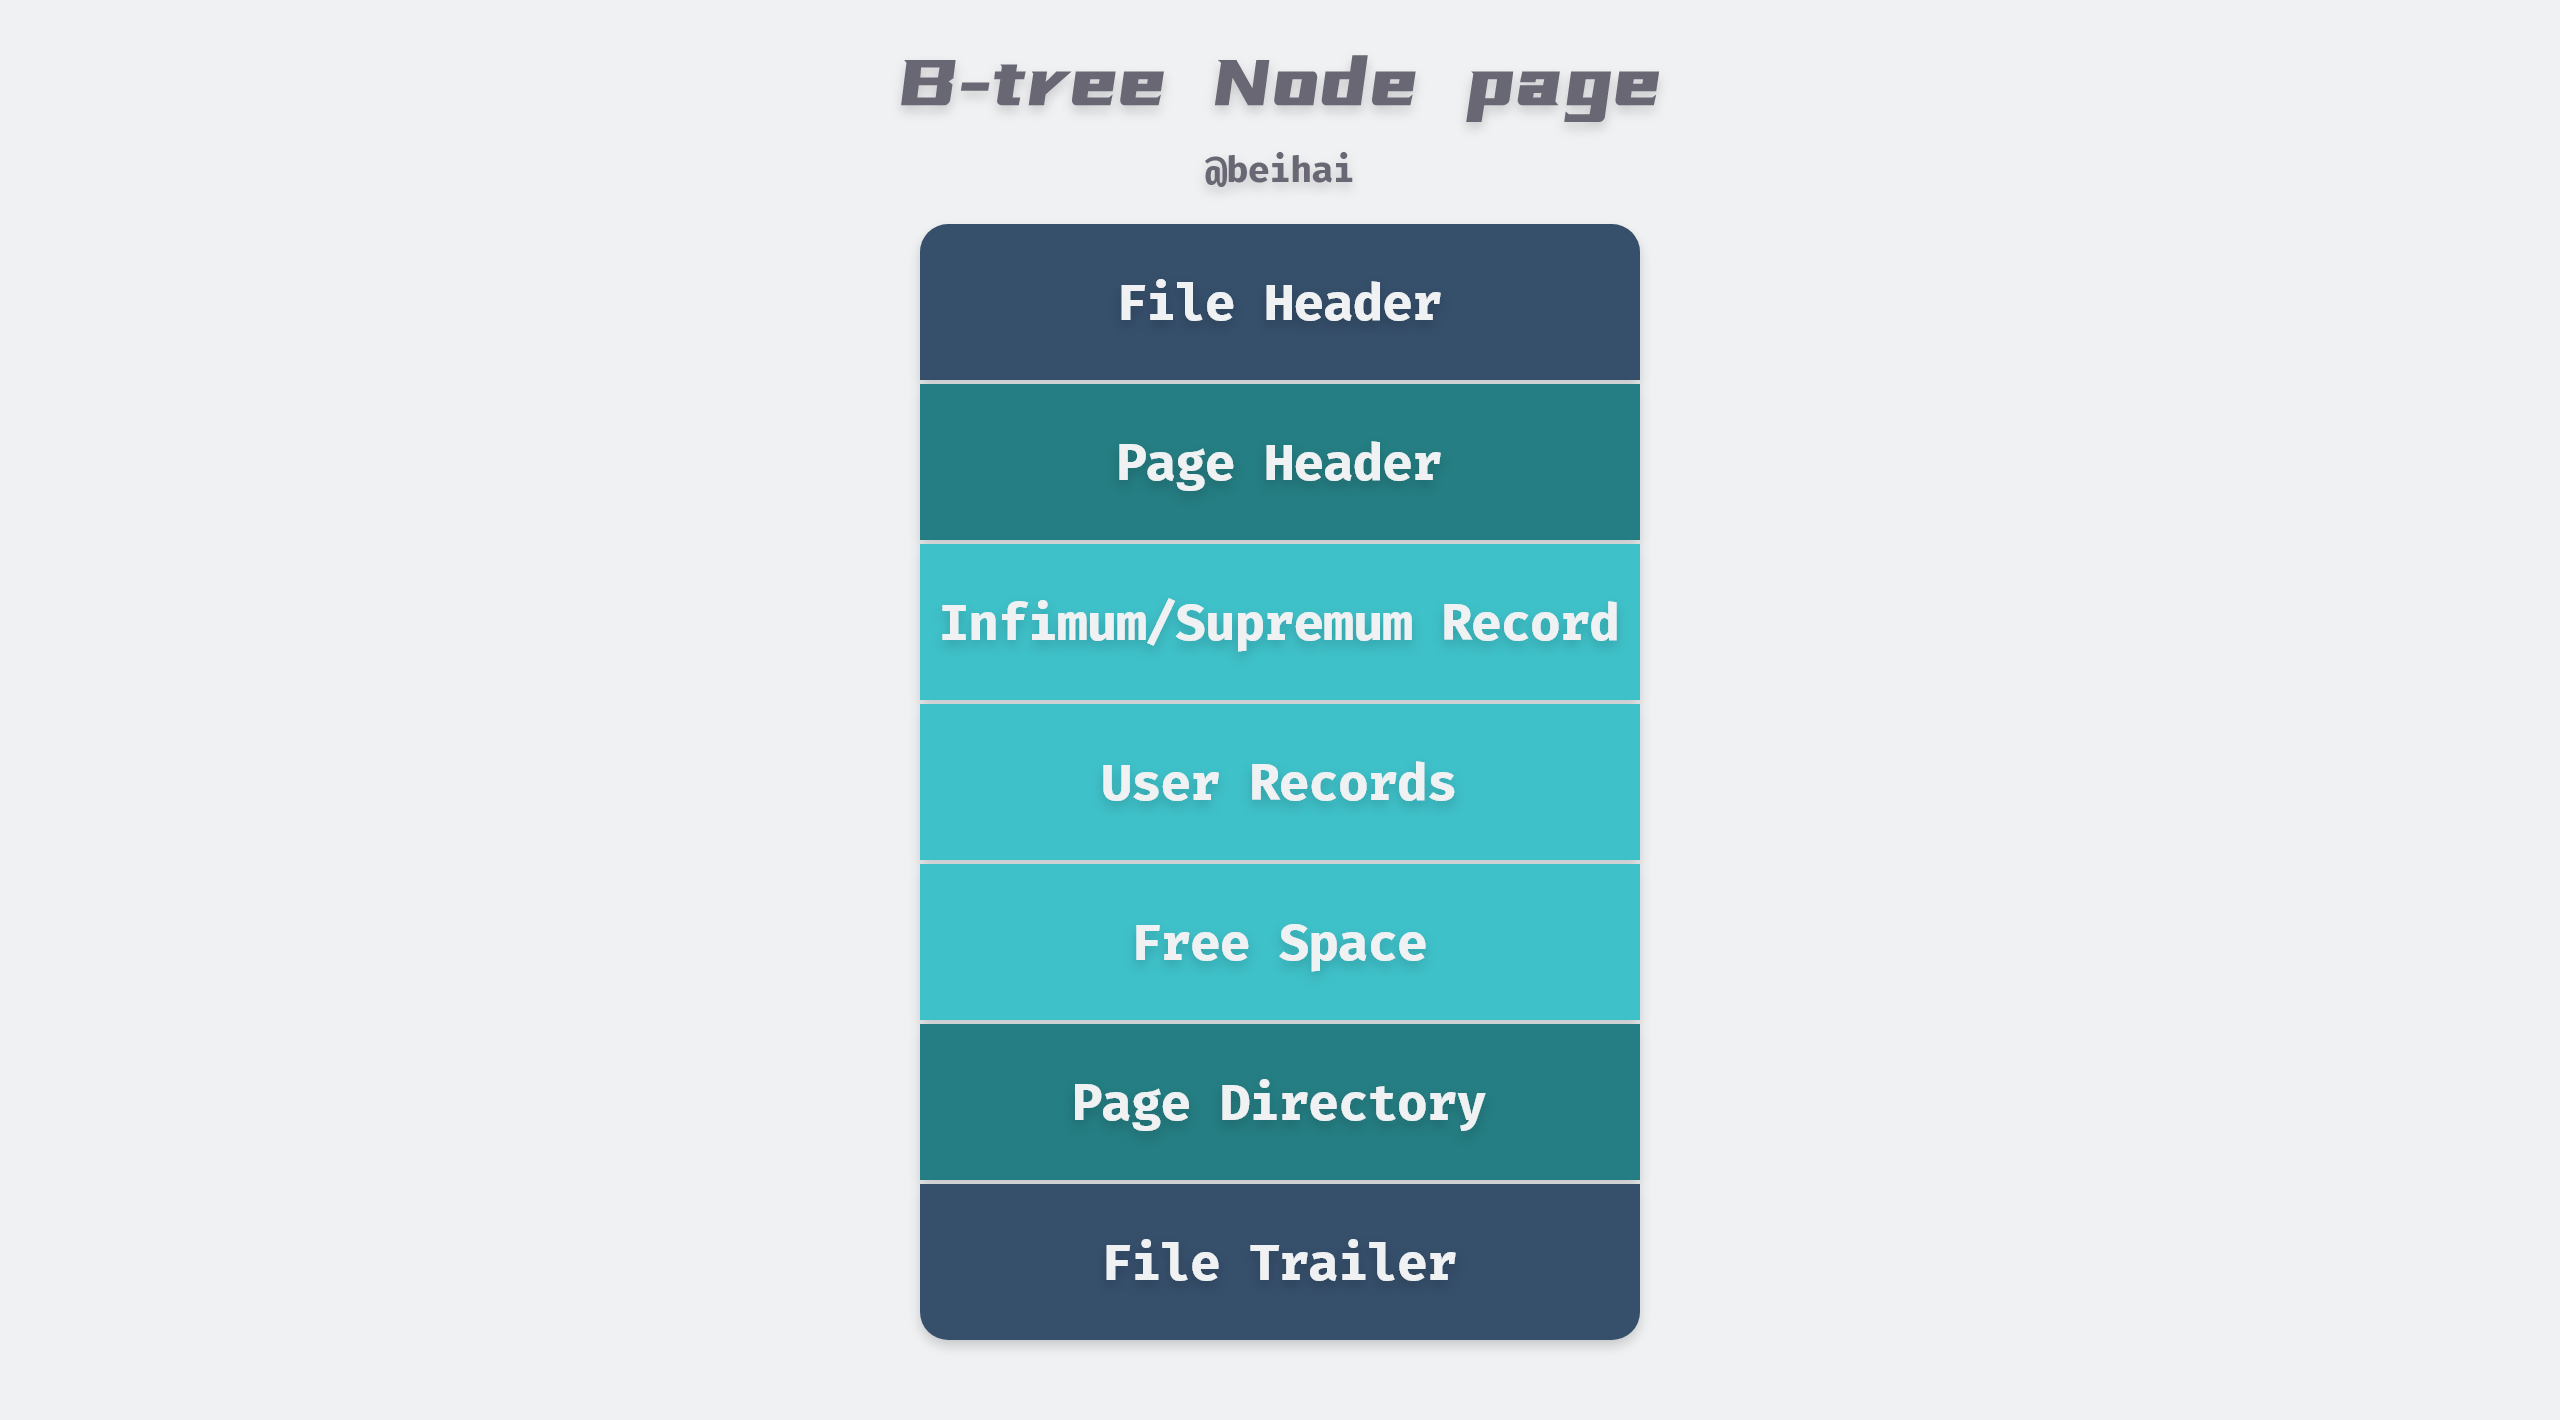 B-Tree node page